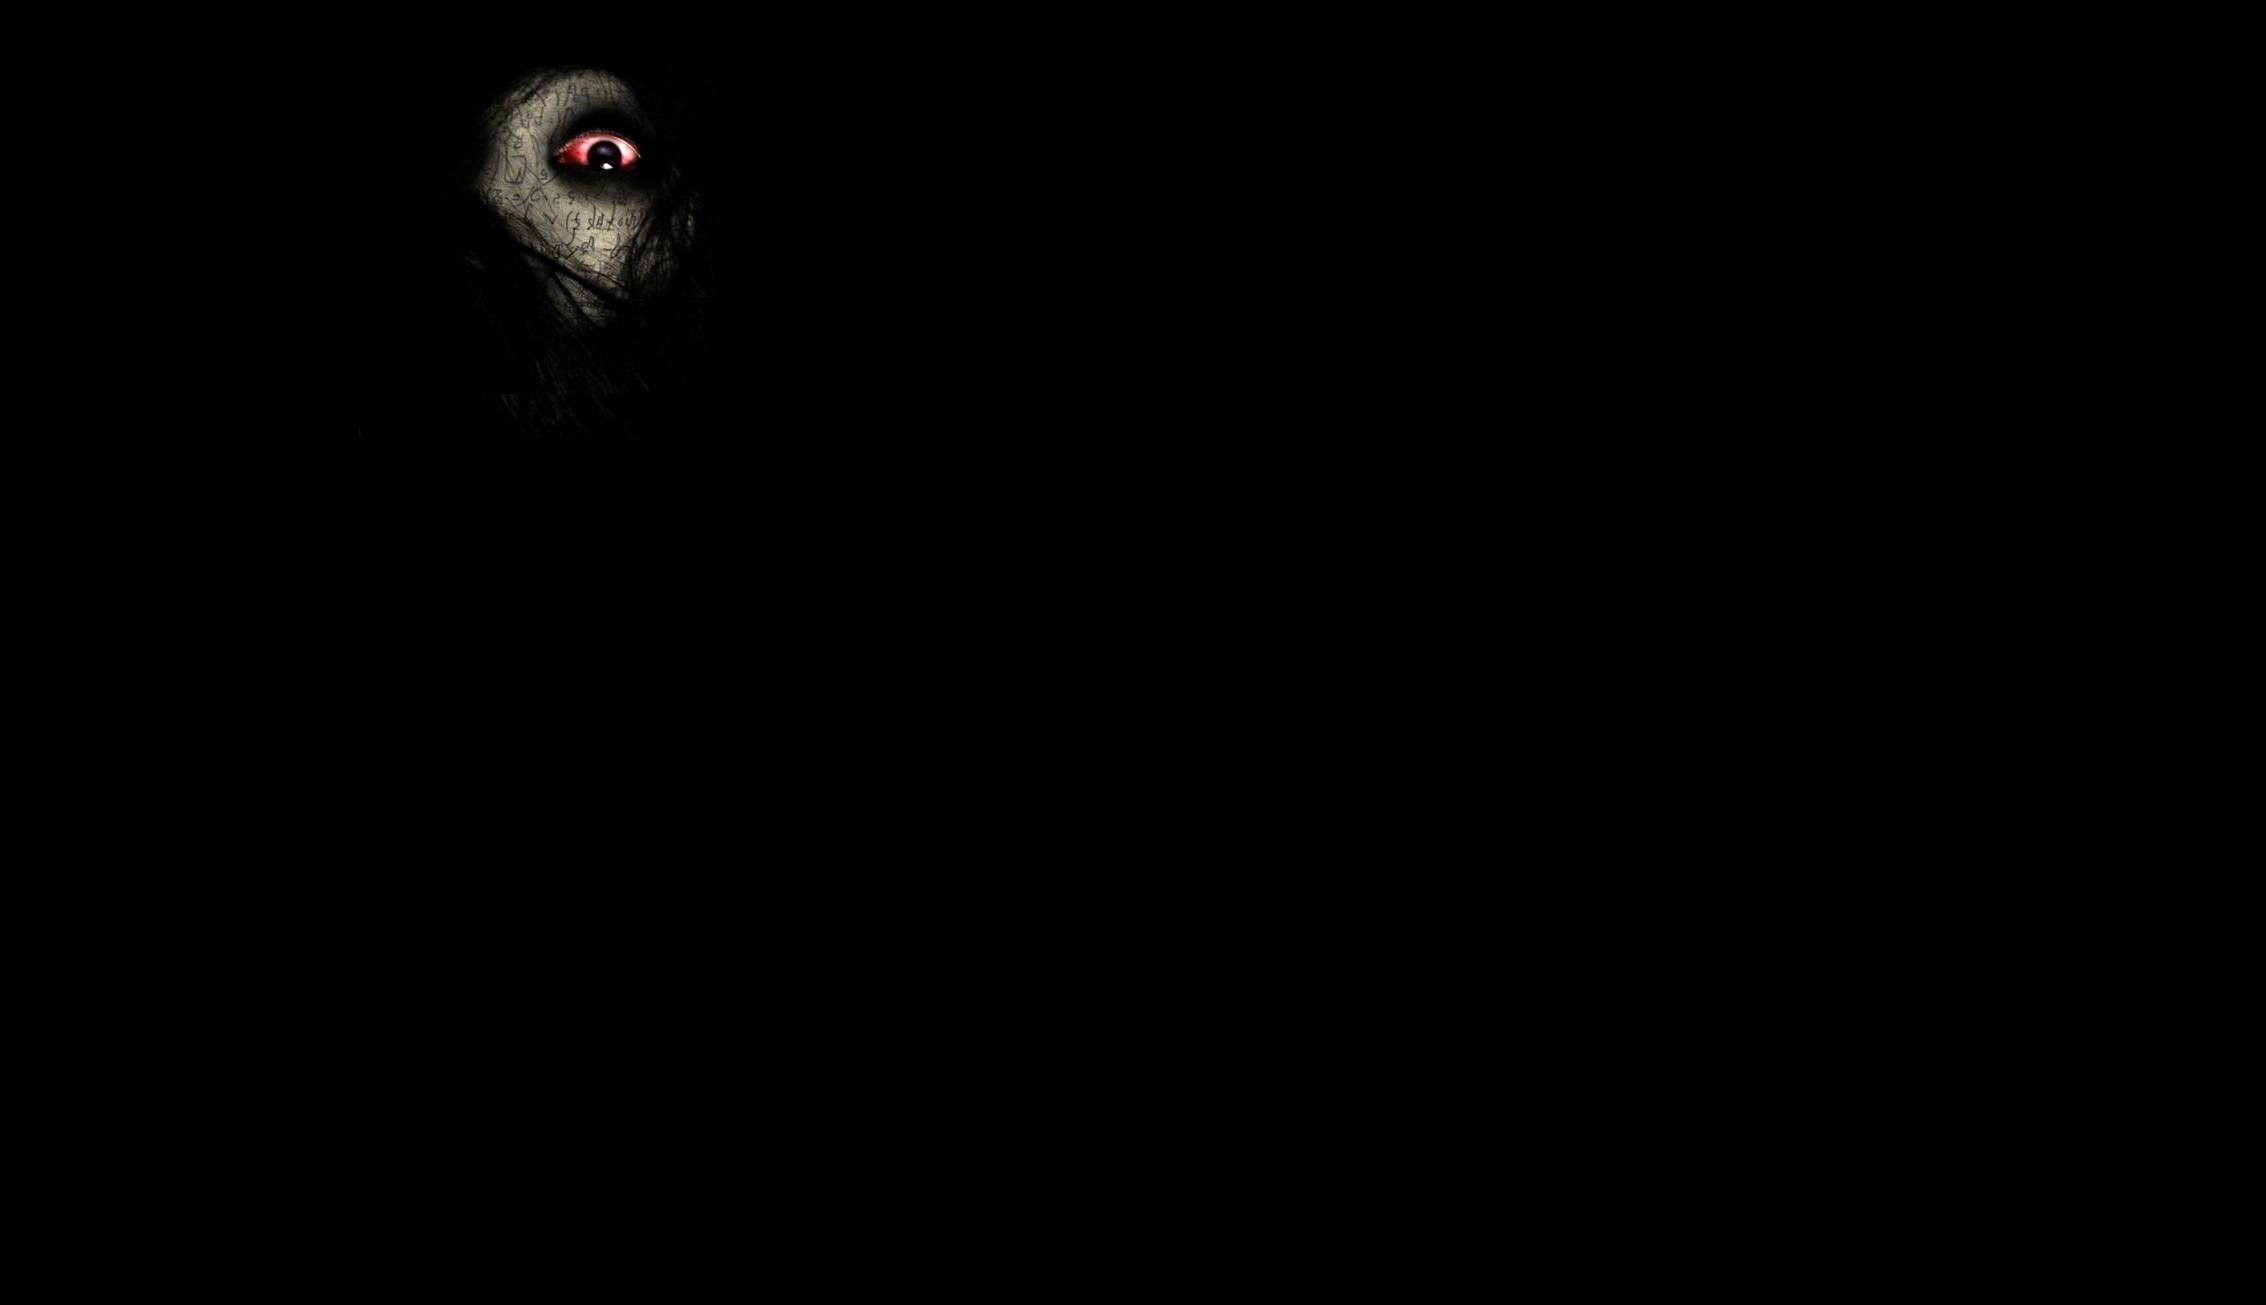 THE GRUDGE horror mystery thriller dark movie film the grudge ju